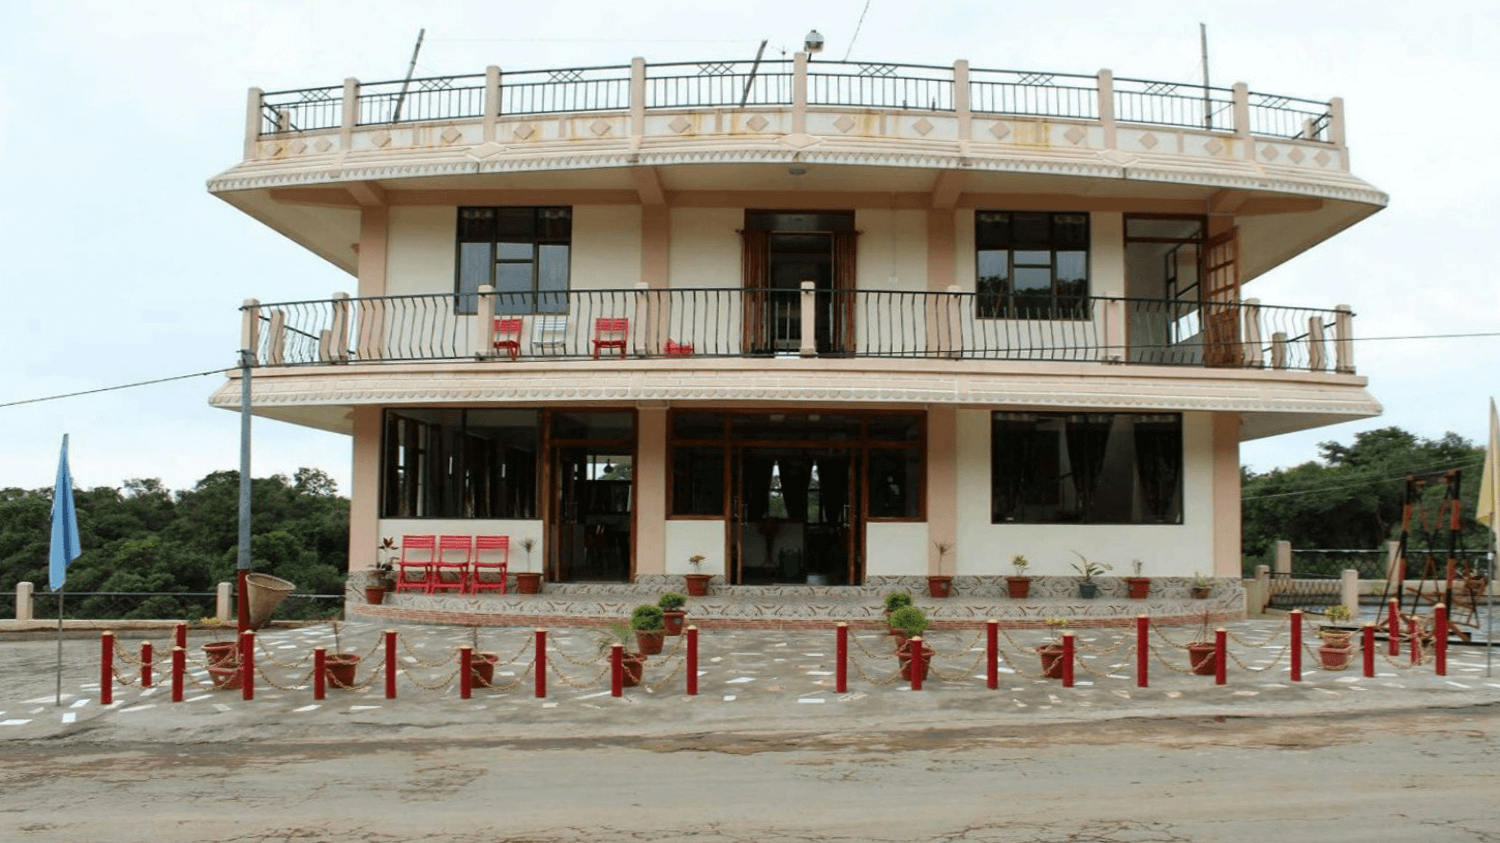 Cordial Lodge and Restaurant, Cherrapunji, Meghalaya, India